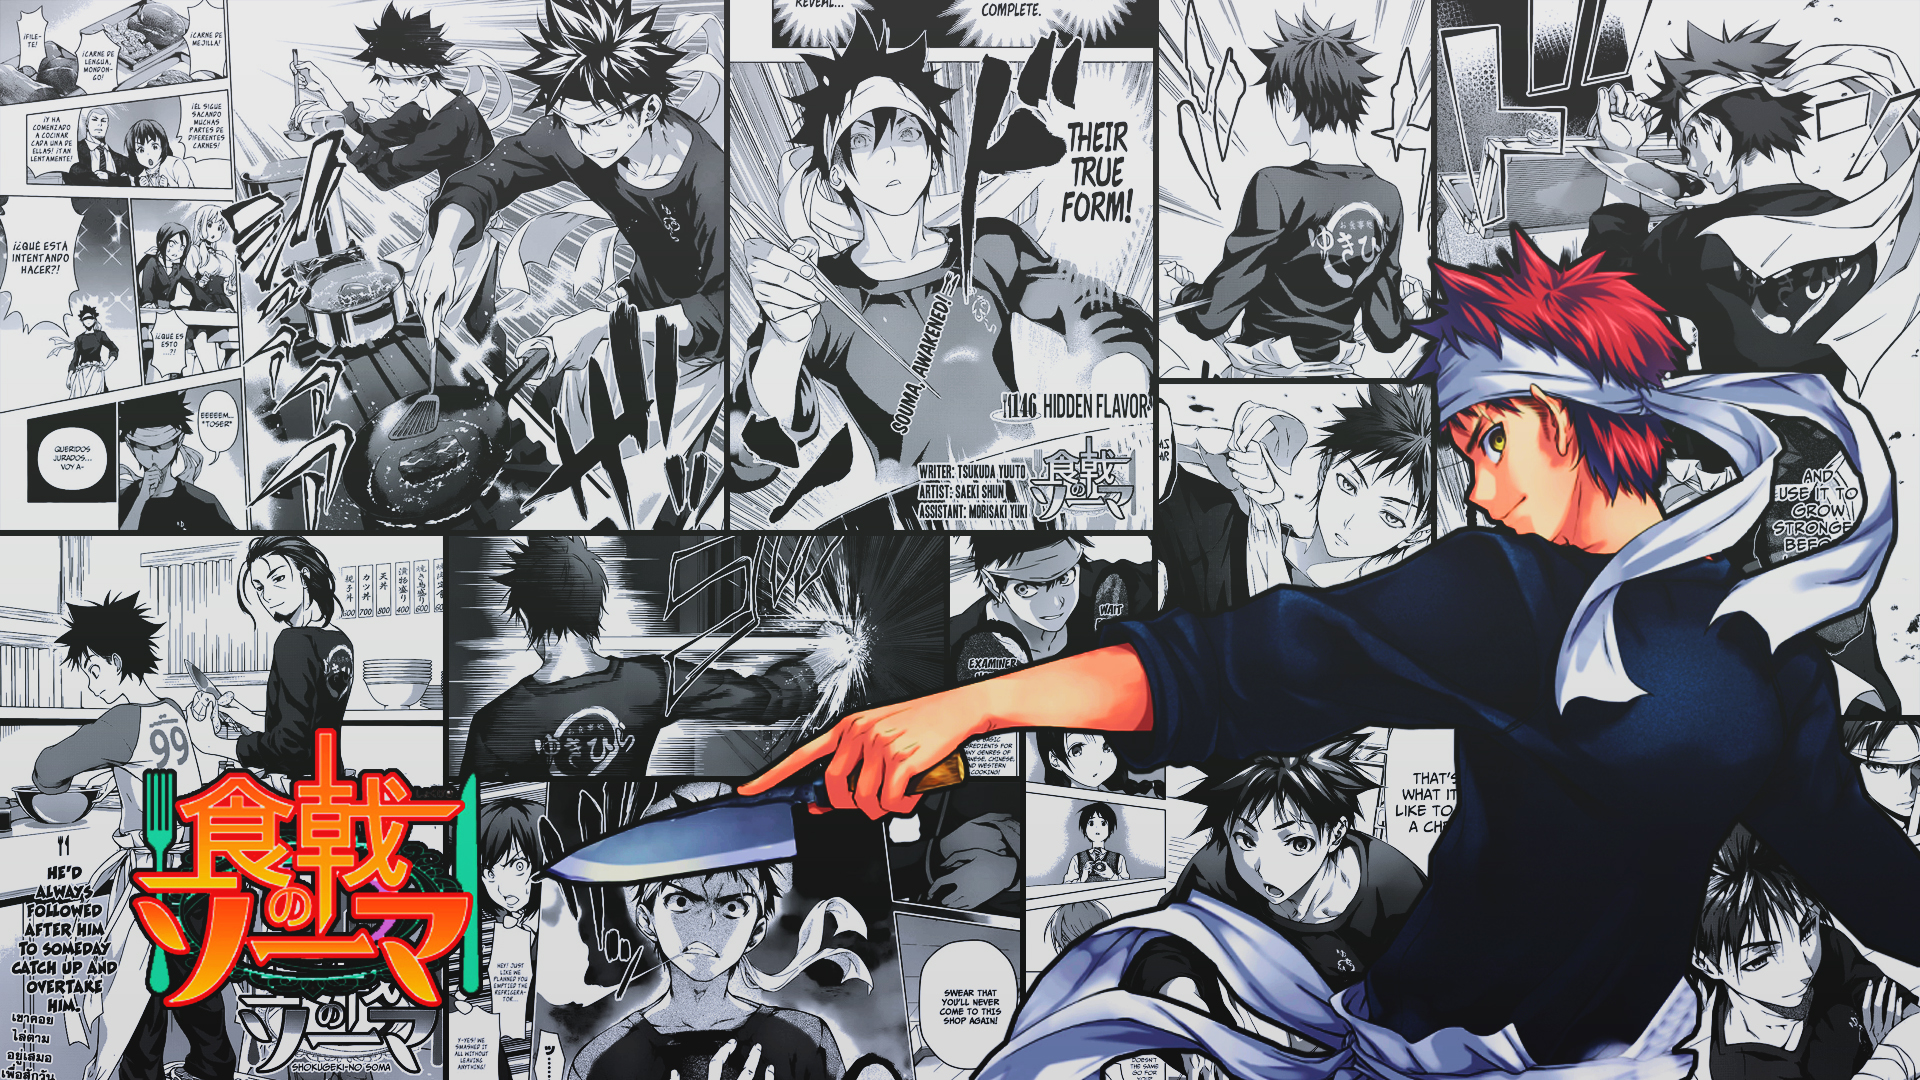 HD desktop wallpaper: Anime, Shokugeki No Soma, Sōma Yukihira, Food Wars:  Shokugeki No Soma download free picture #803542